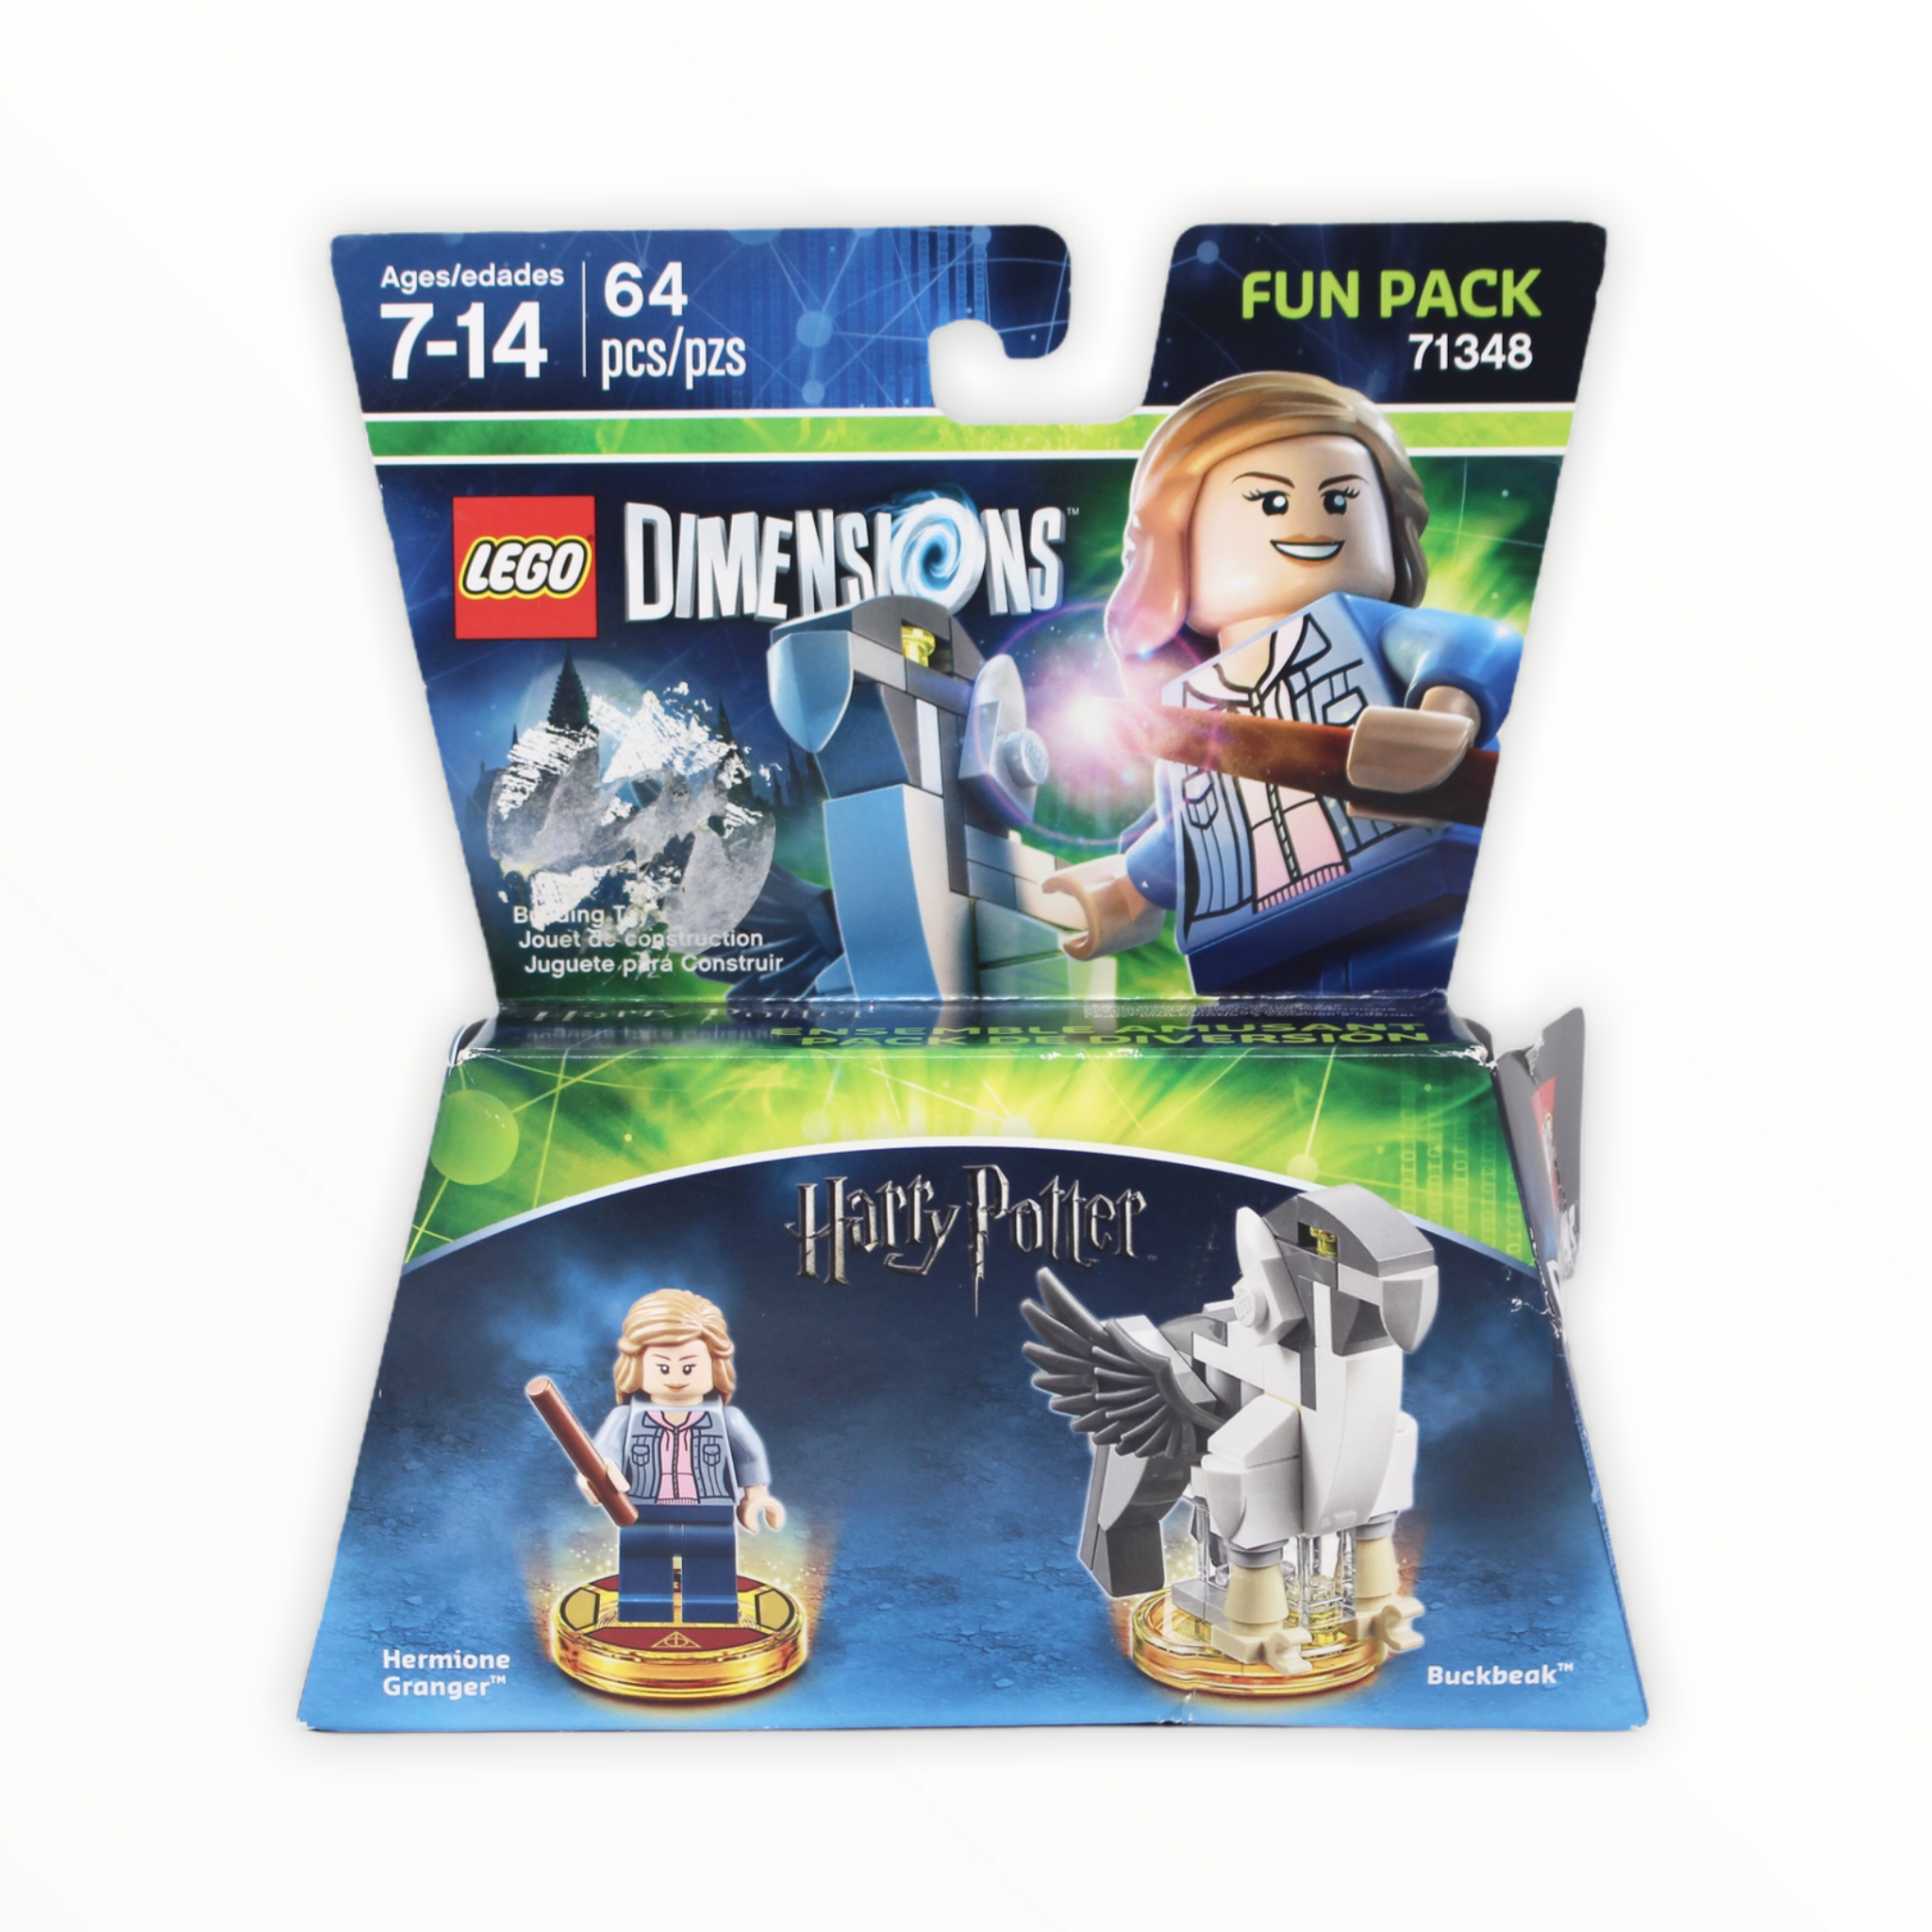 Retired Set 71348 LEGO Dimensions Hermione Granger and Buckbeak